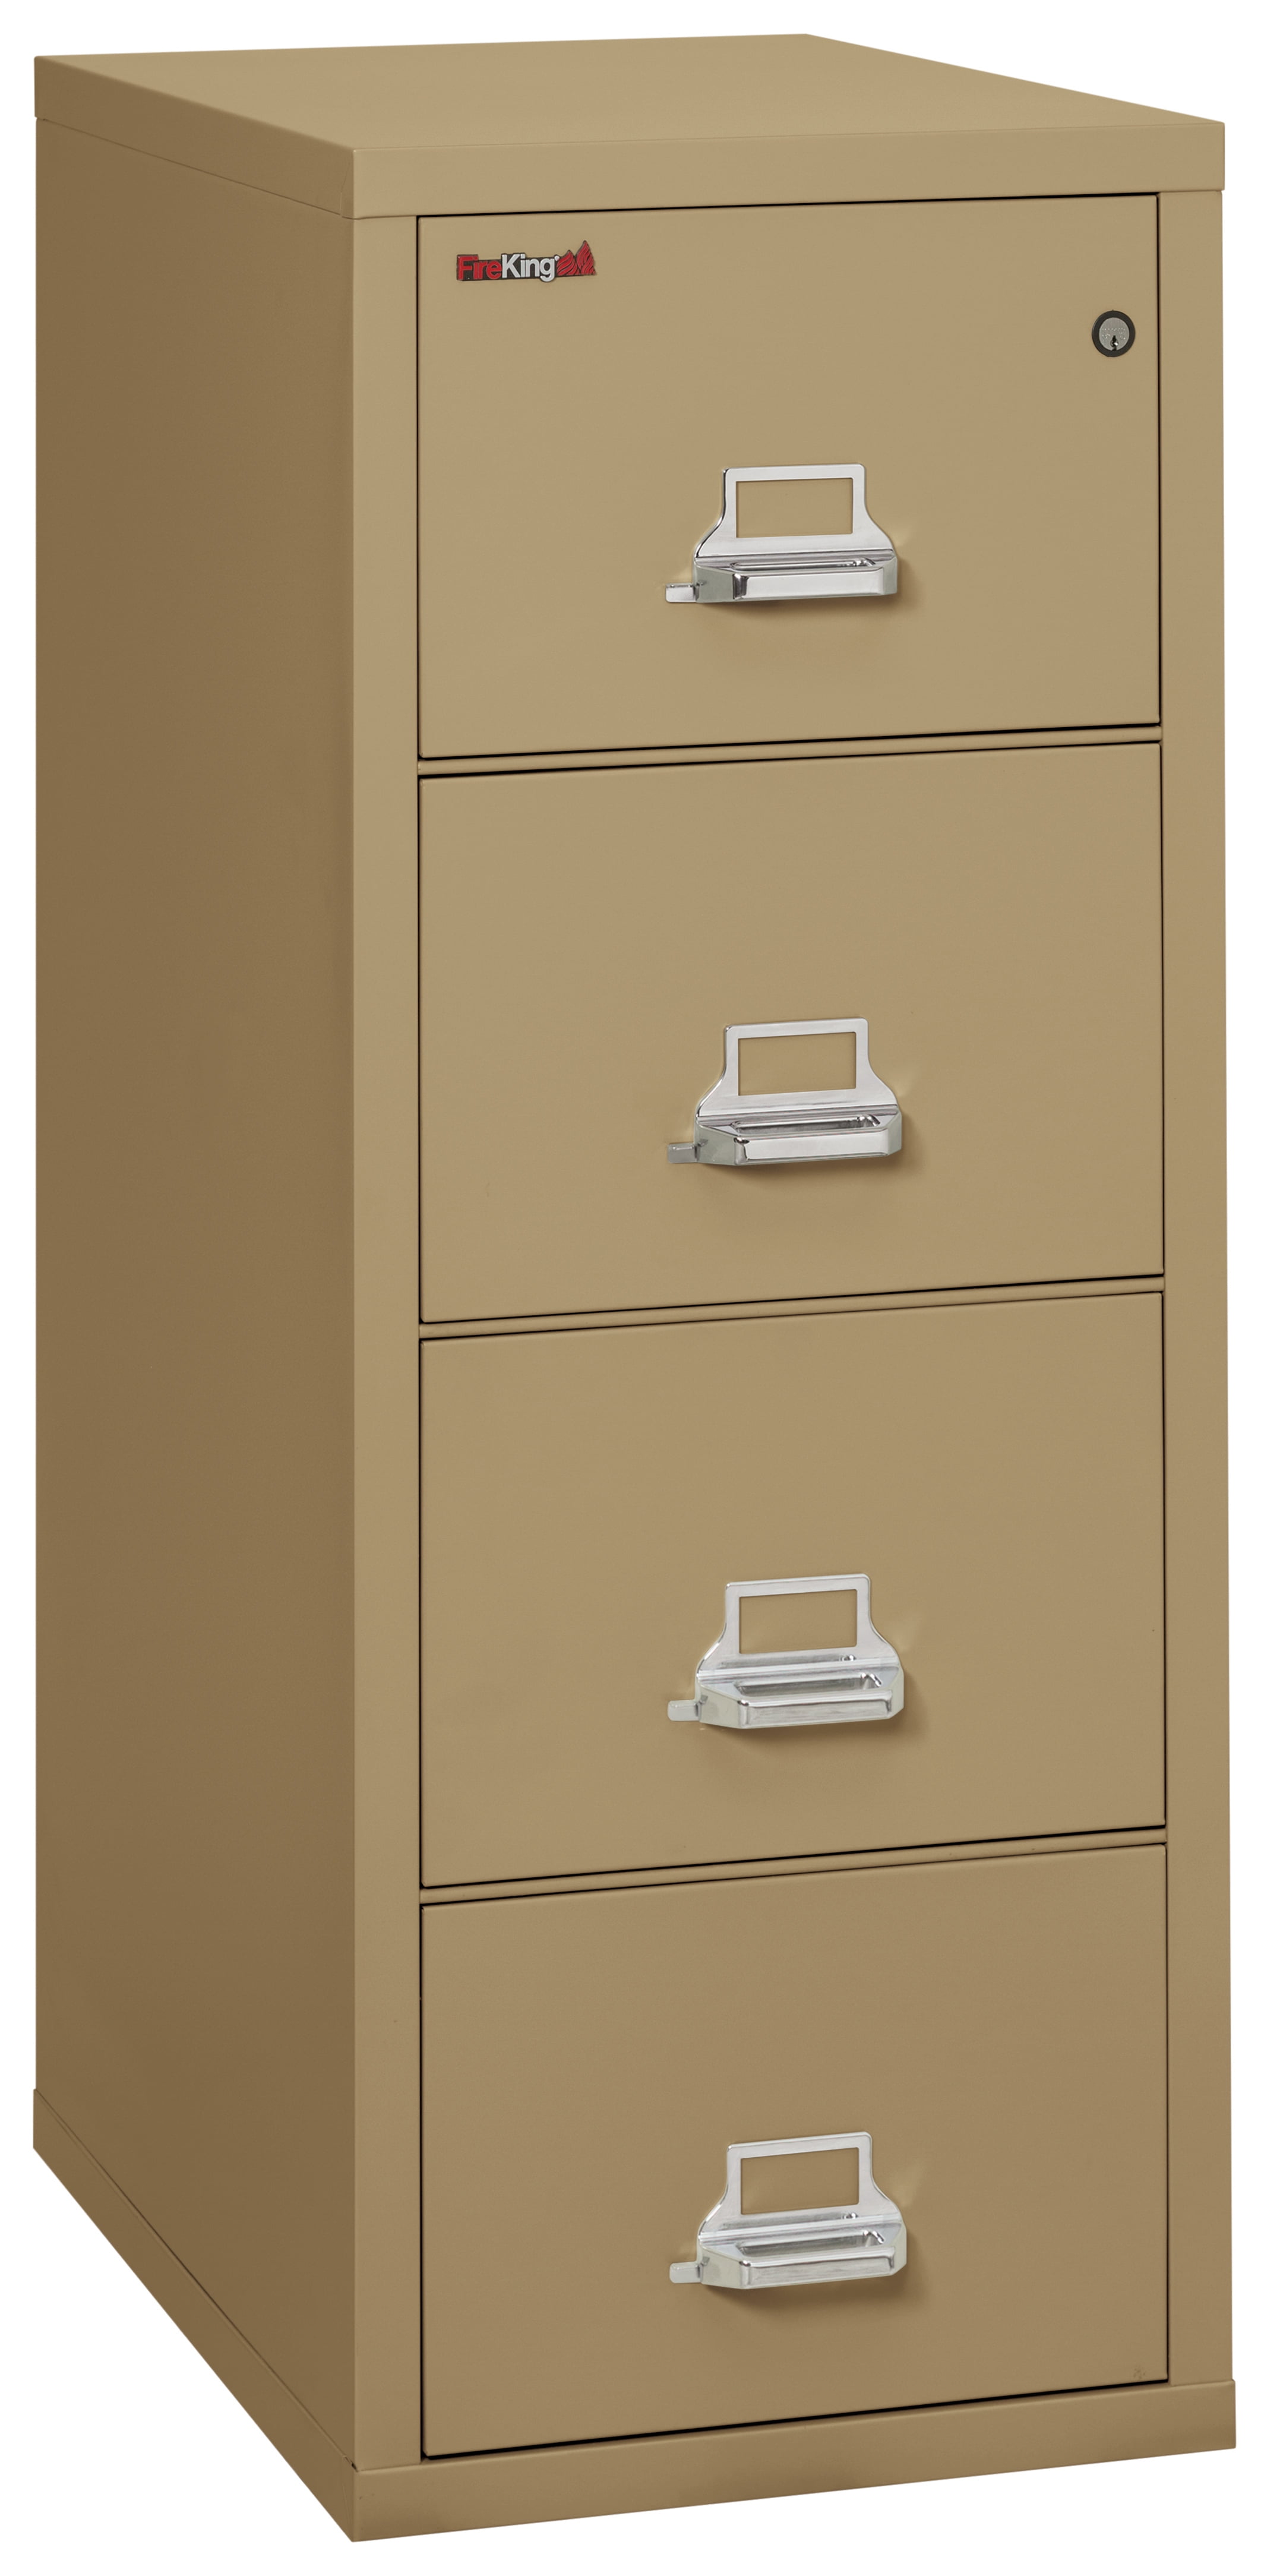 Vertical Fireproof File Cabinet